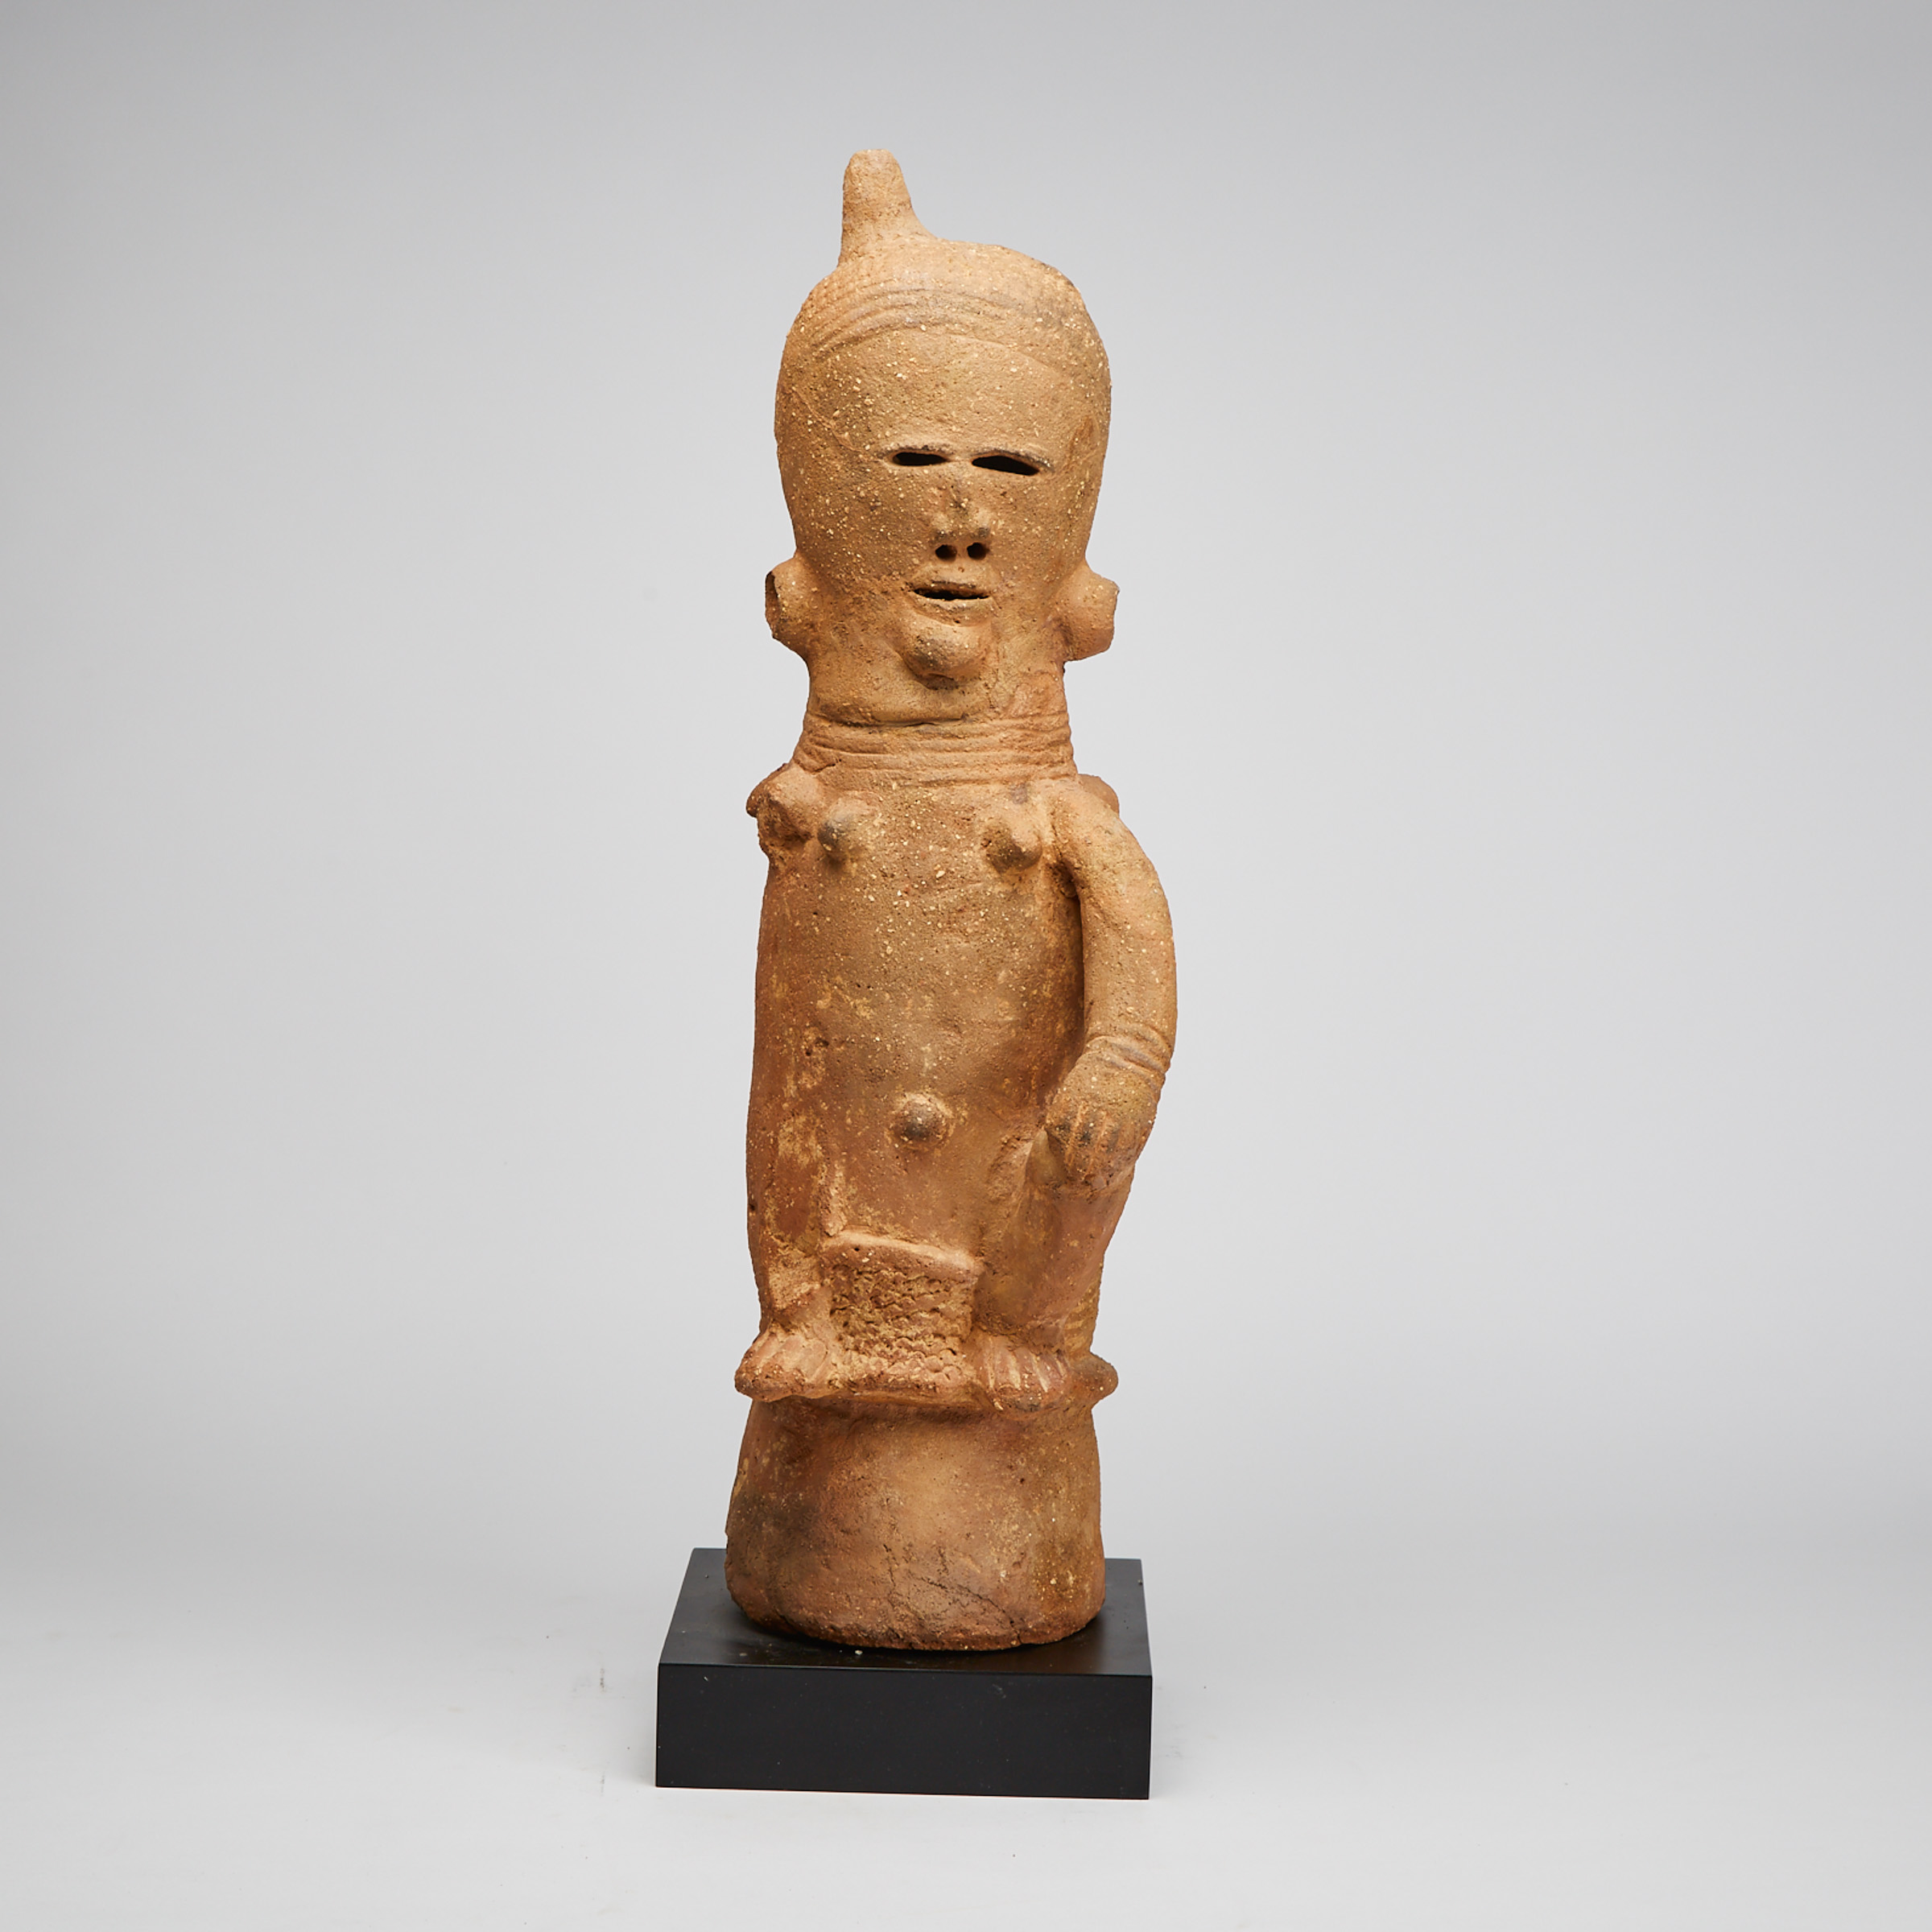 Terra Cotta Janus Seated Figure, possibly Katsina or Sokoto, Nigeria, West Africa